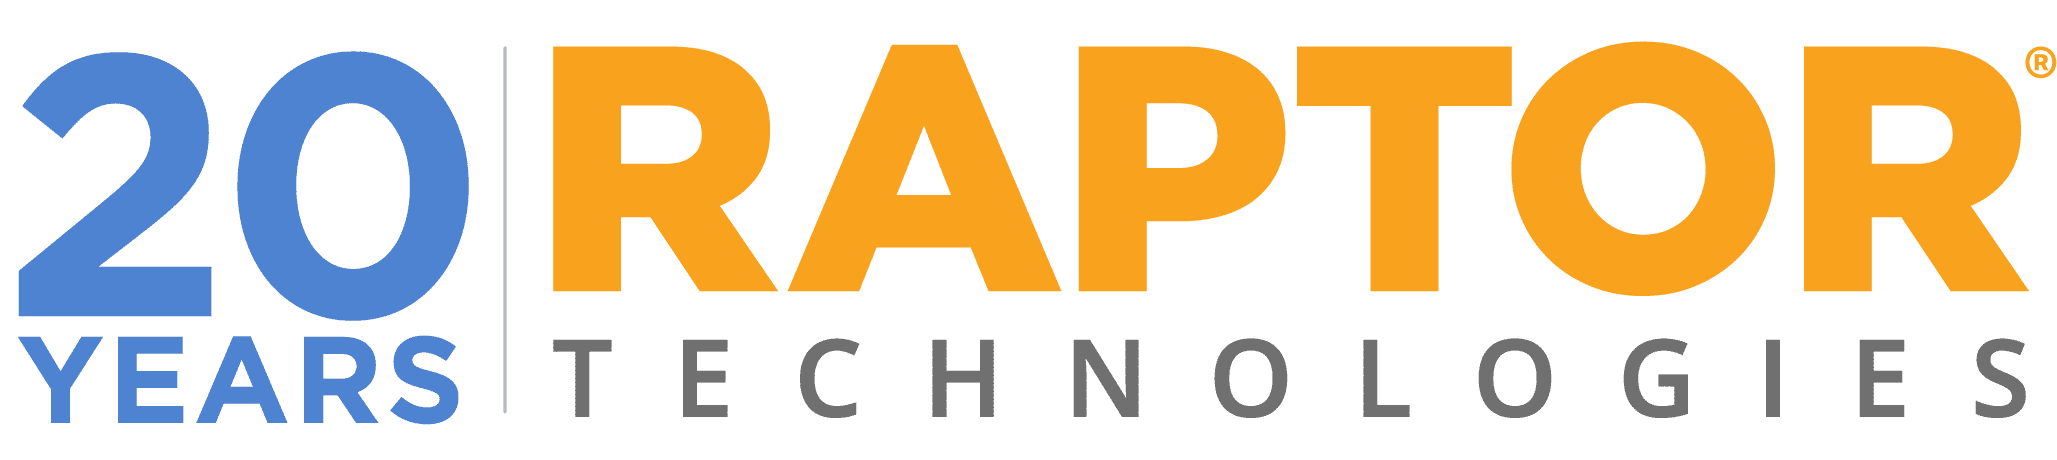 Raptor Technologies - School Safety Software - 20th Anniversary